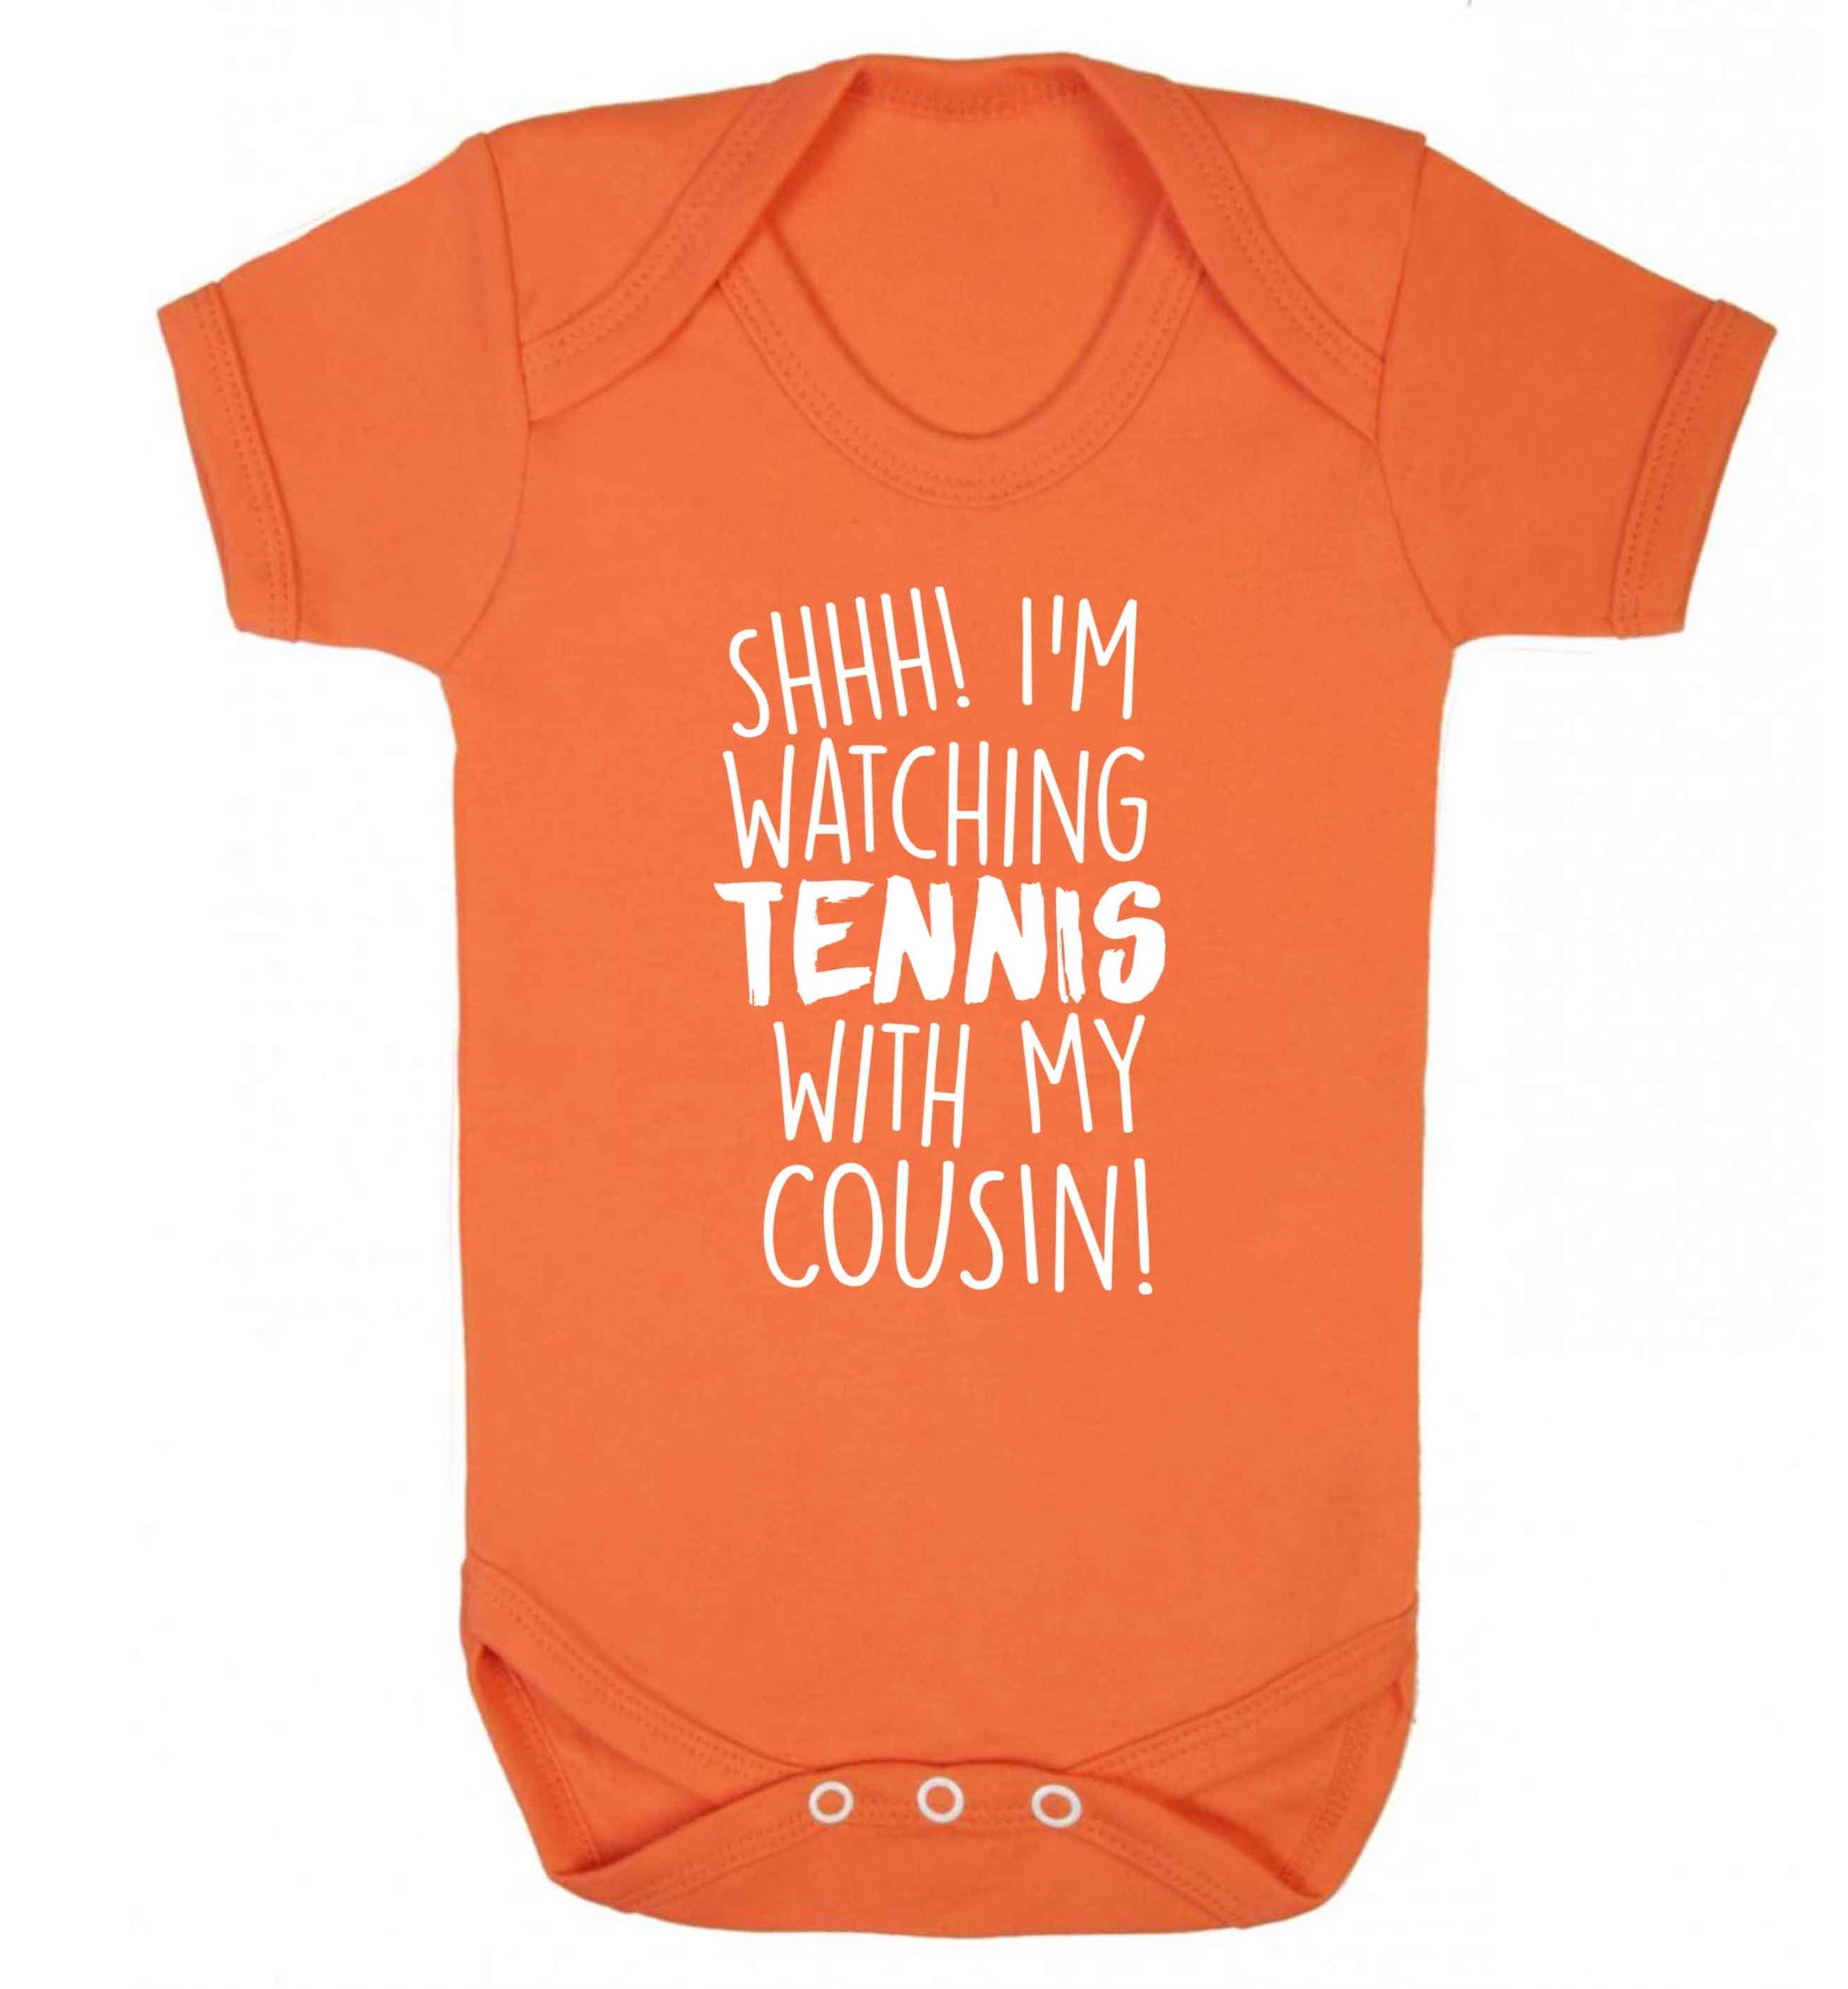 Shh! I'm watching tennis with my cousin! Baby Vest orange 18-24 months